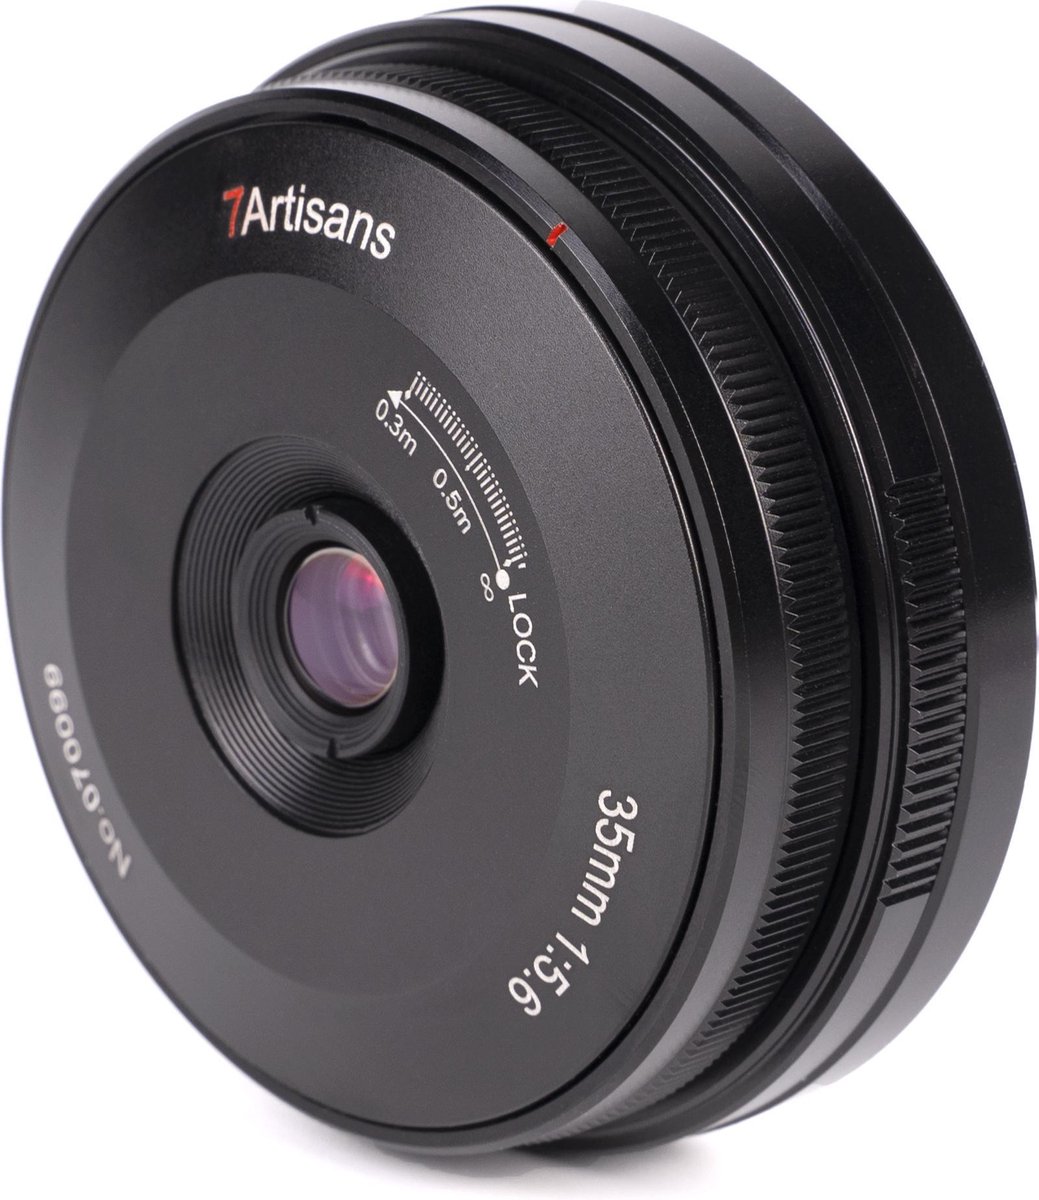 7 Artisans - Cameralens - 35mm F5.6 Full Frame voor Panasonic/Leica/Sigma L-vatting